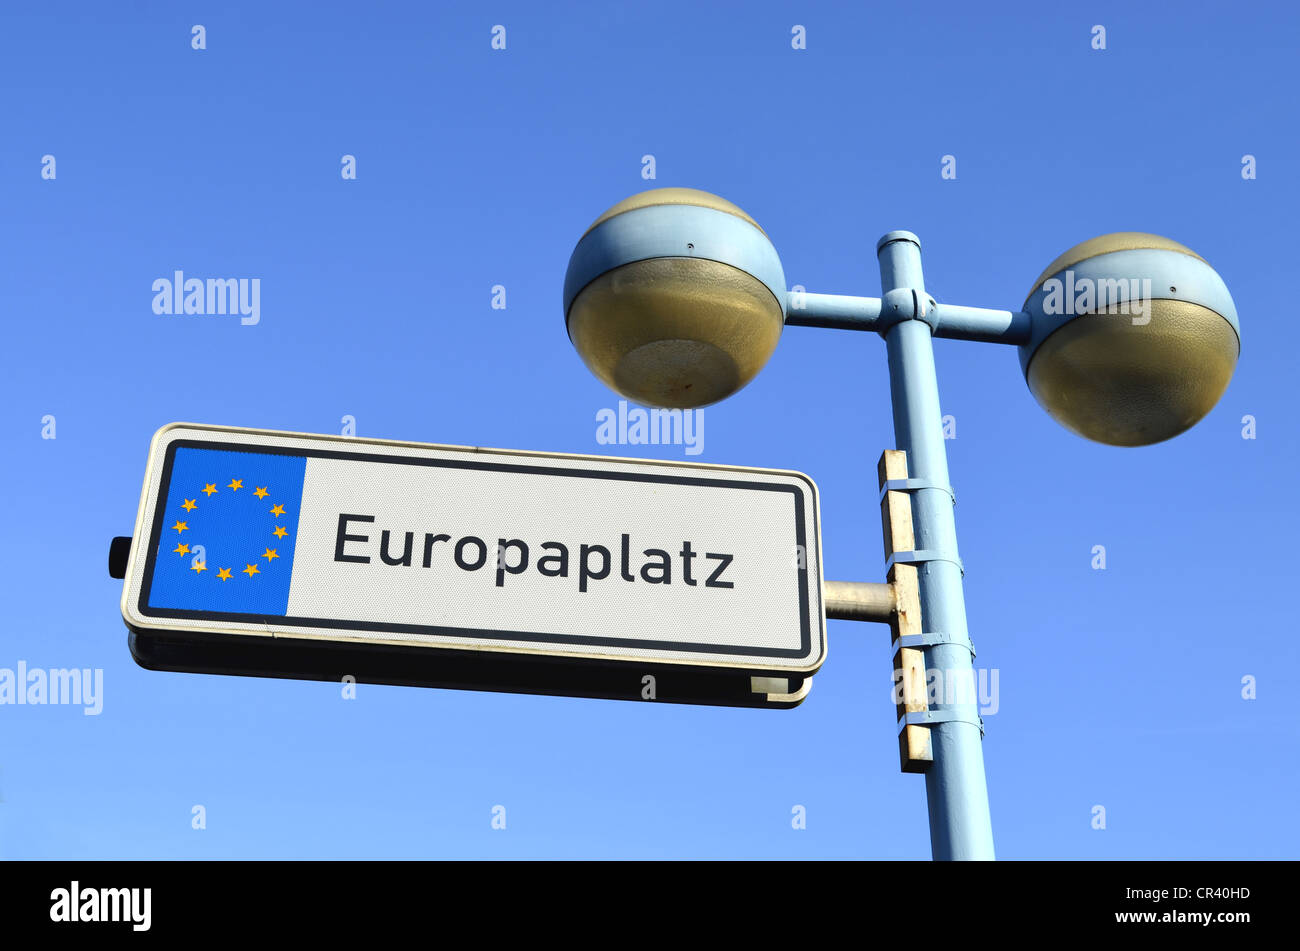 Europaplatz, street sign avec drapeau européen, Dorsten, Ruhr, Nordrhein-Westfalen, Germany, Europe Banque D'Images